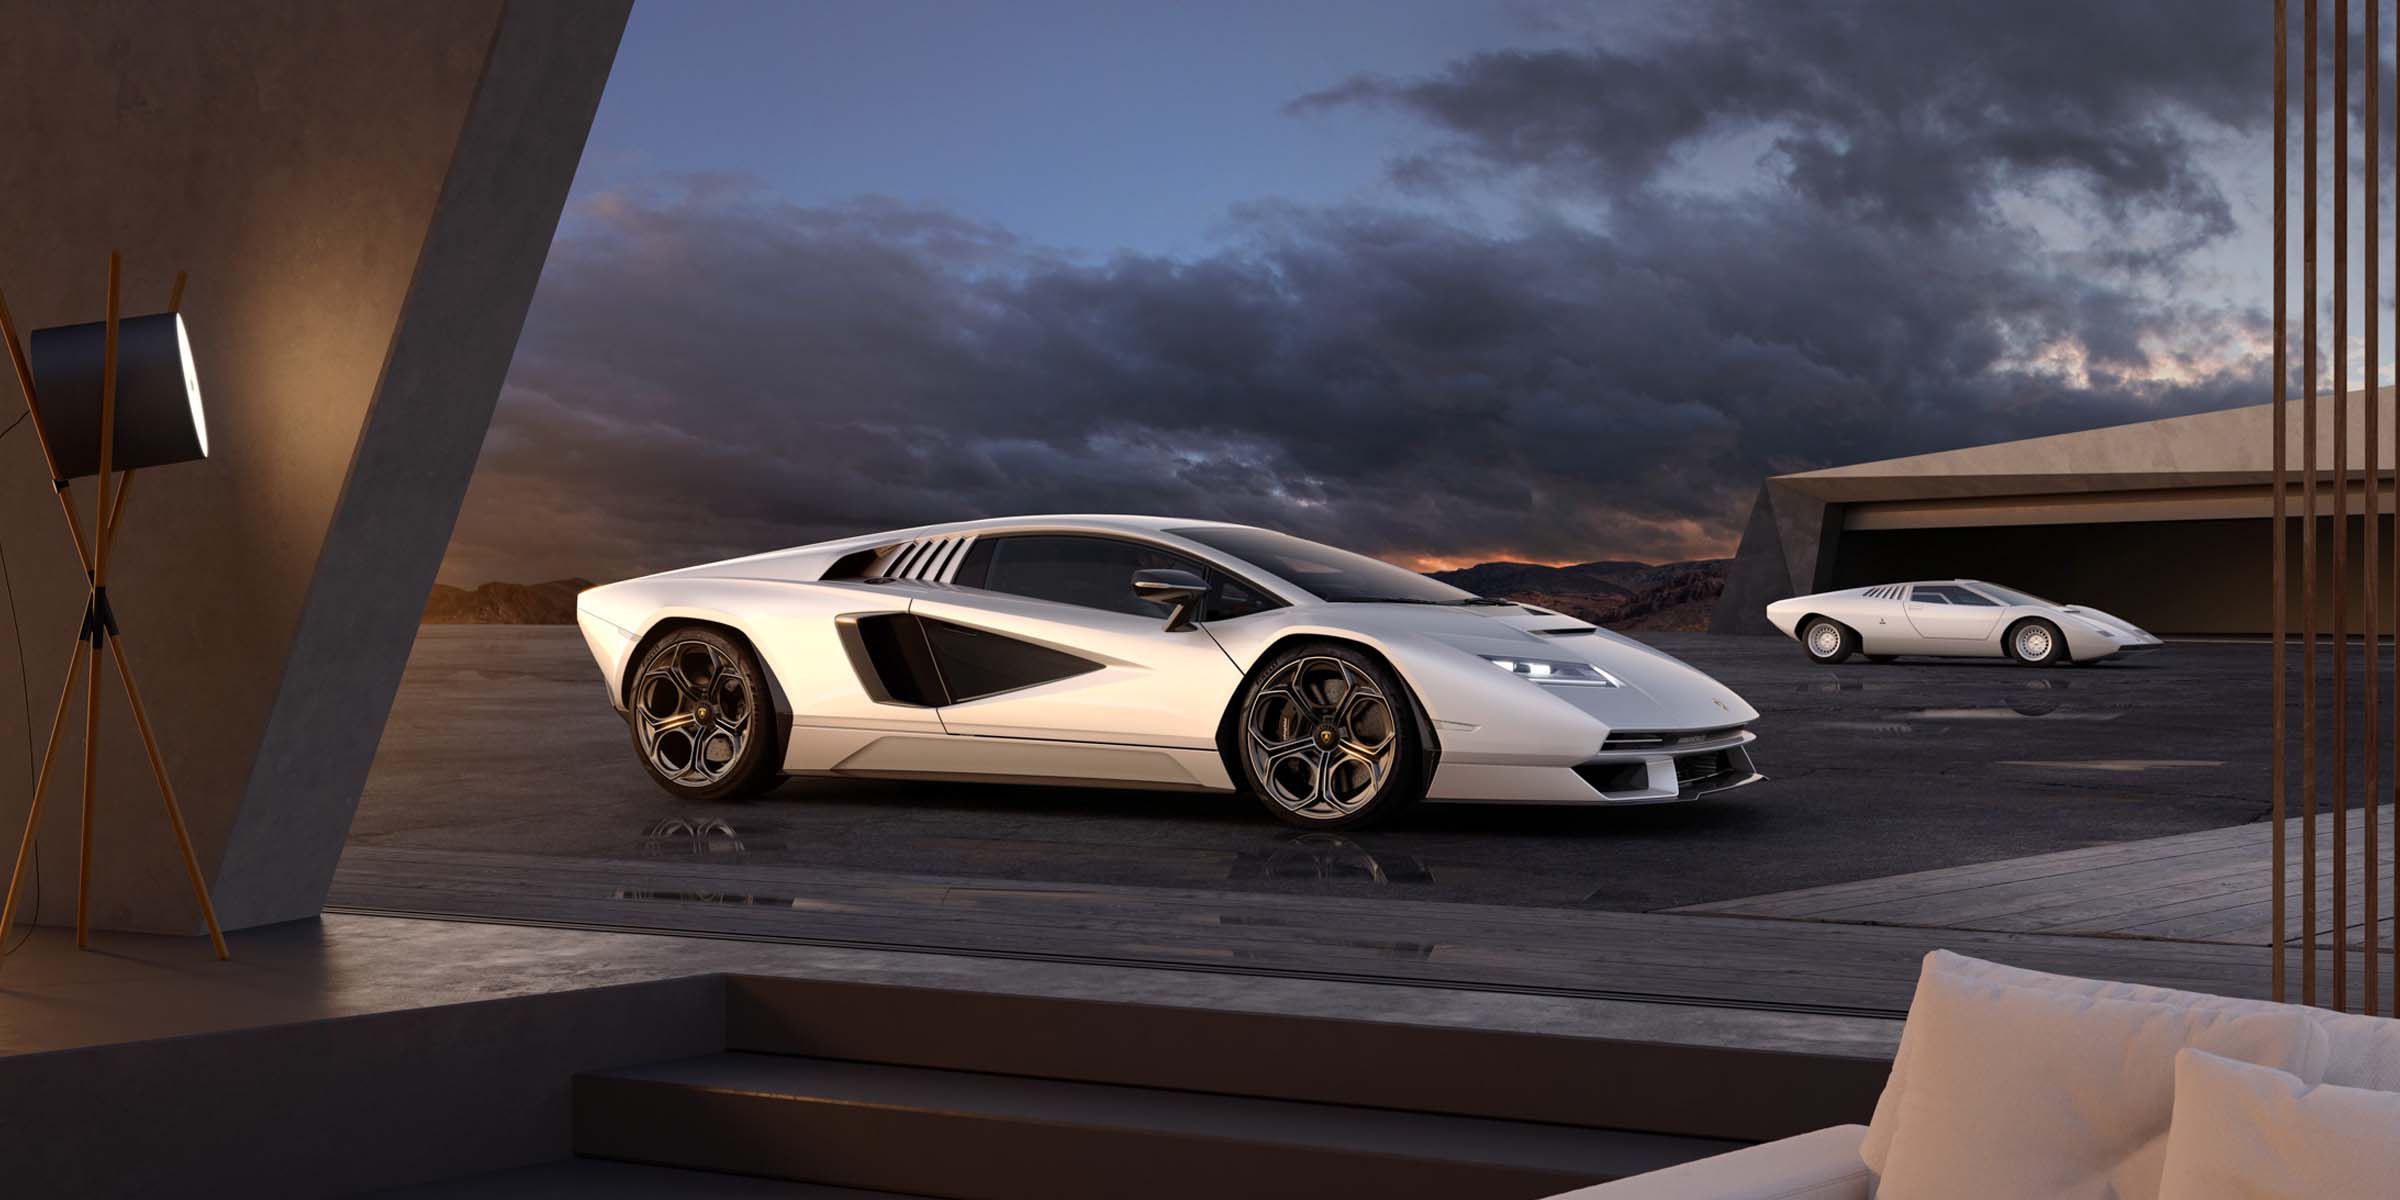 Entry-level Lamborghini Urus gains more power and design changes